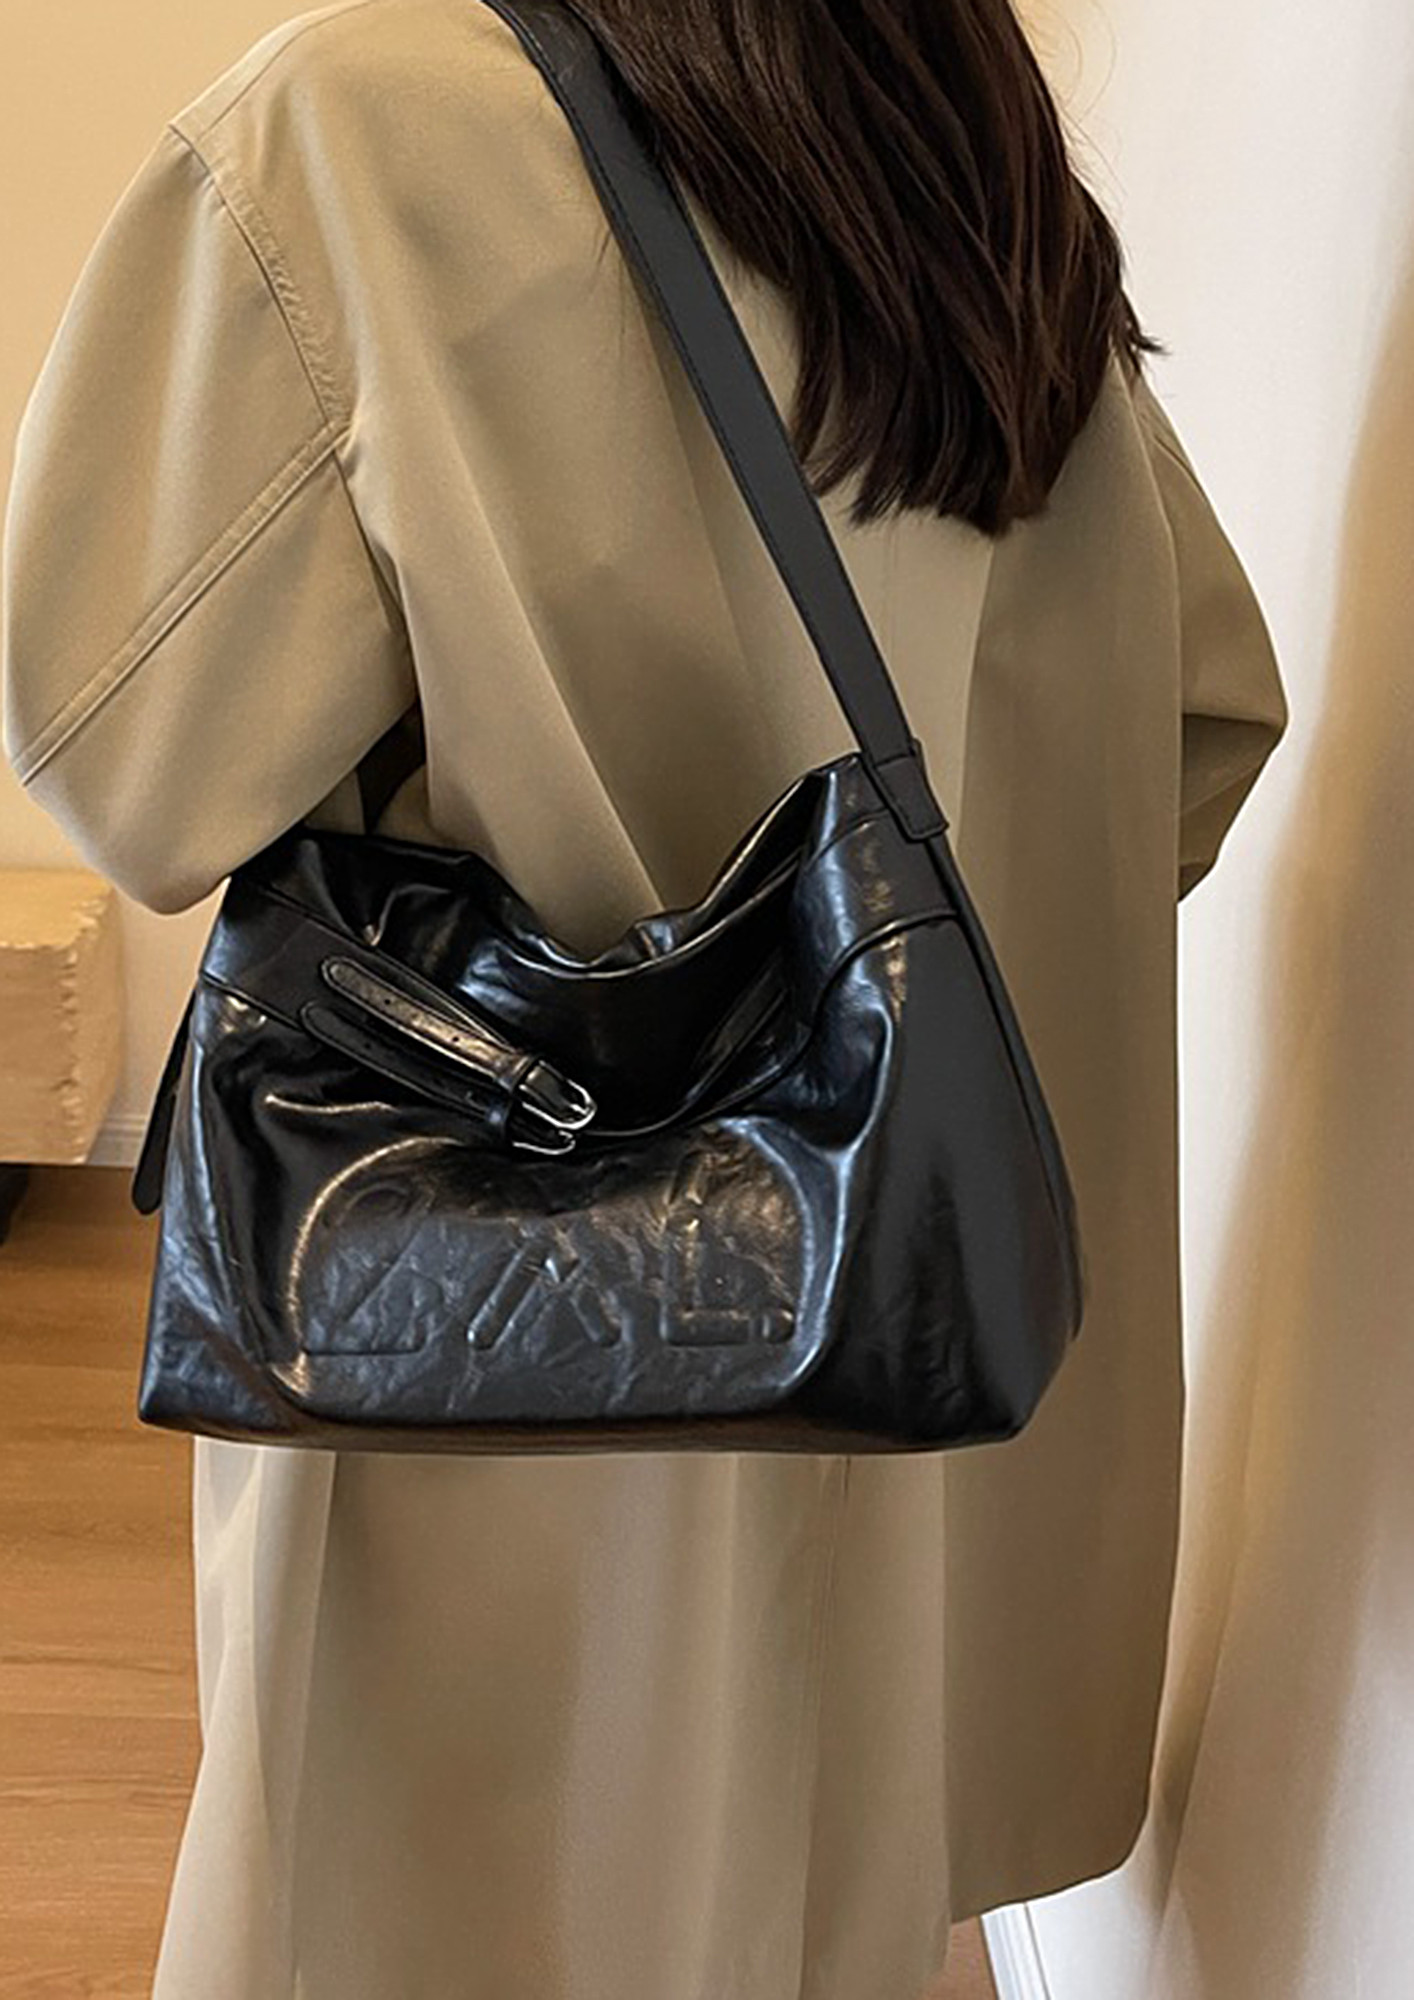 Designer' Luxury Bags for Women and Men | DIOR